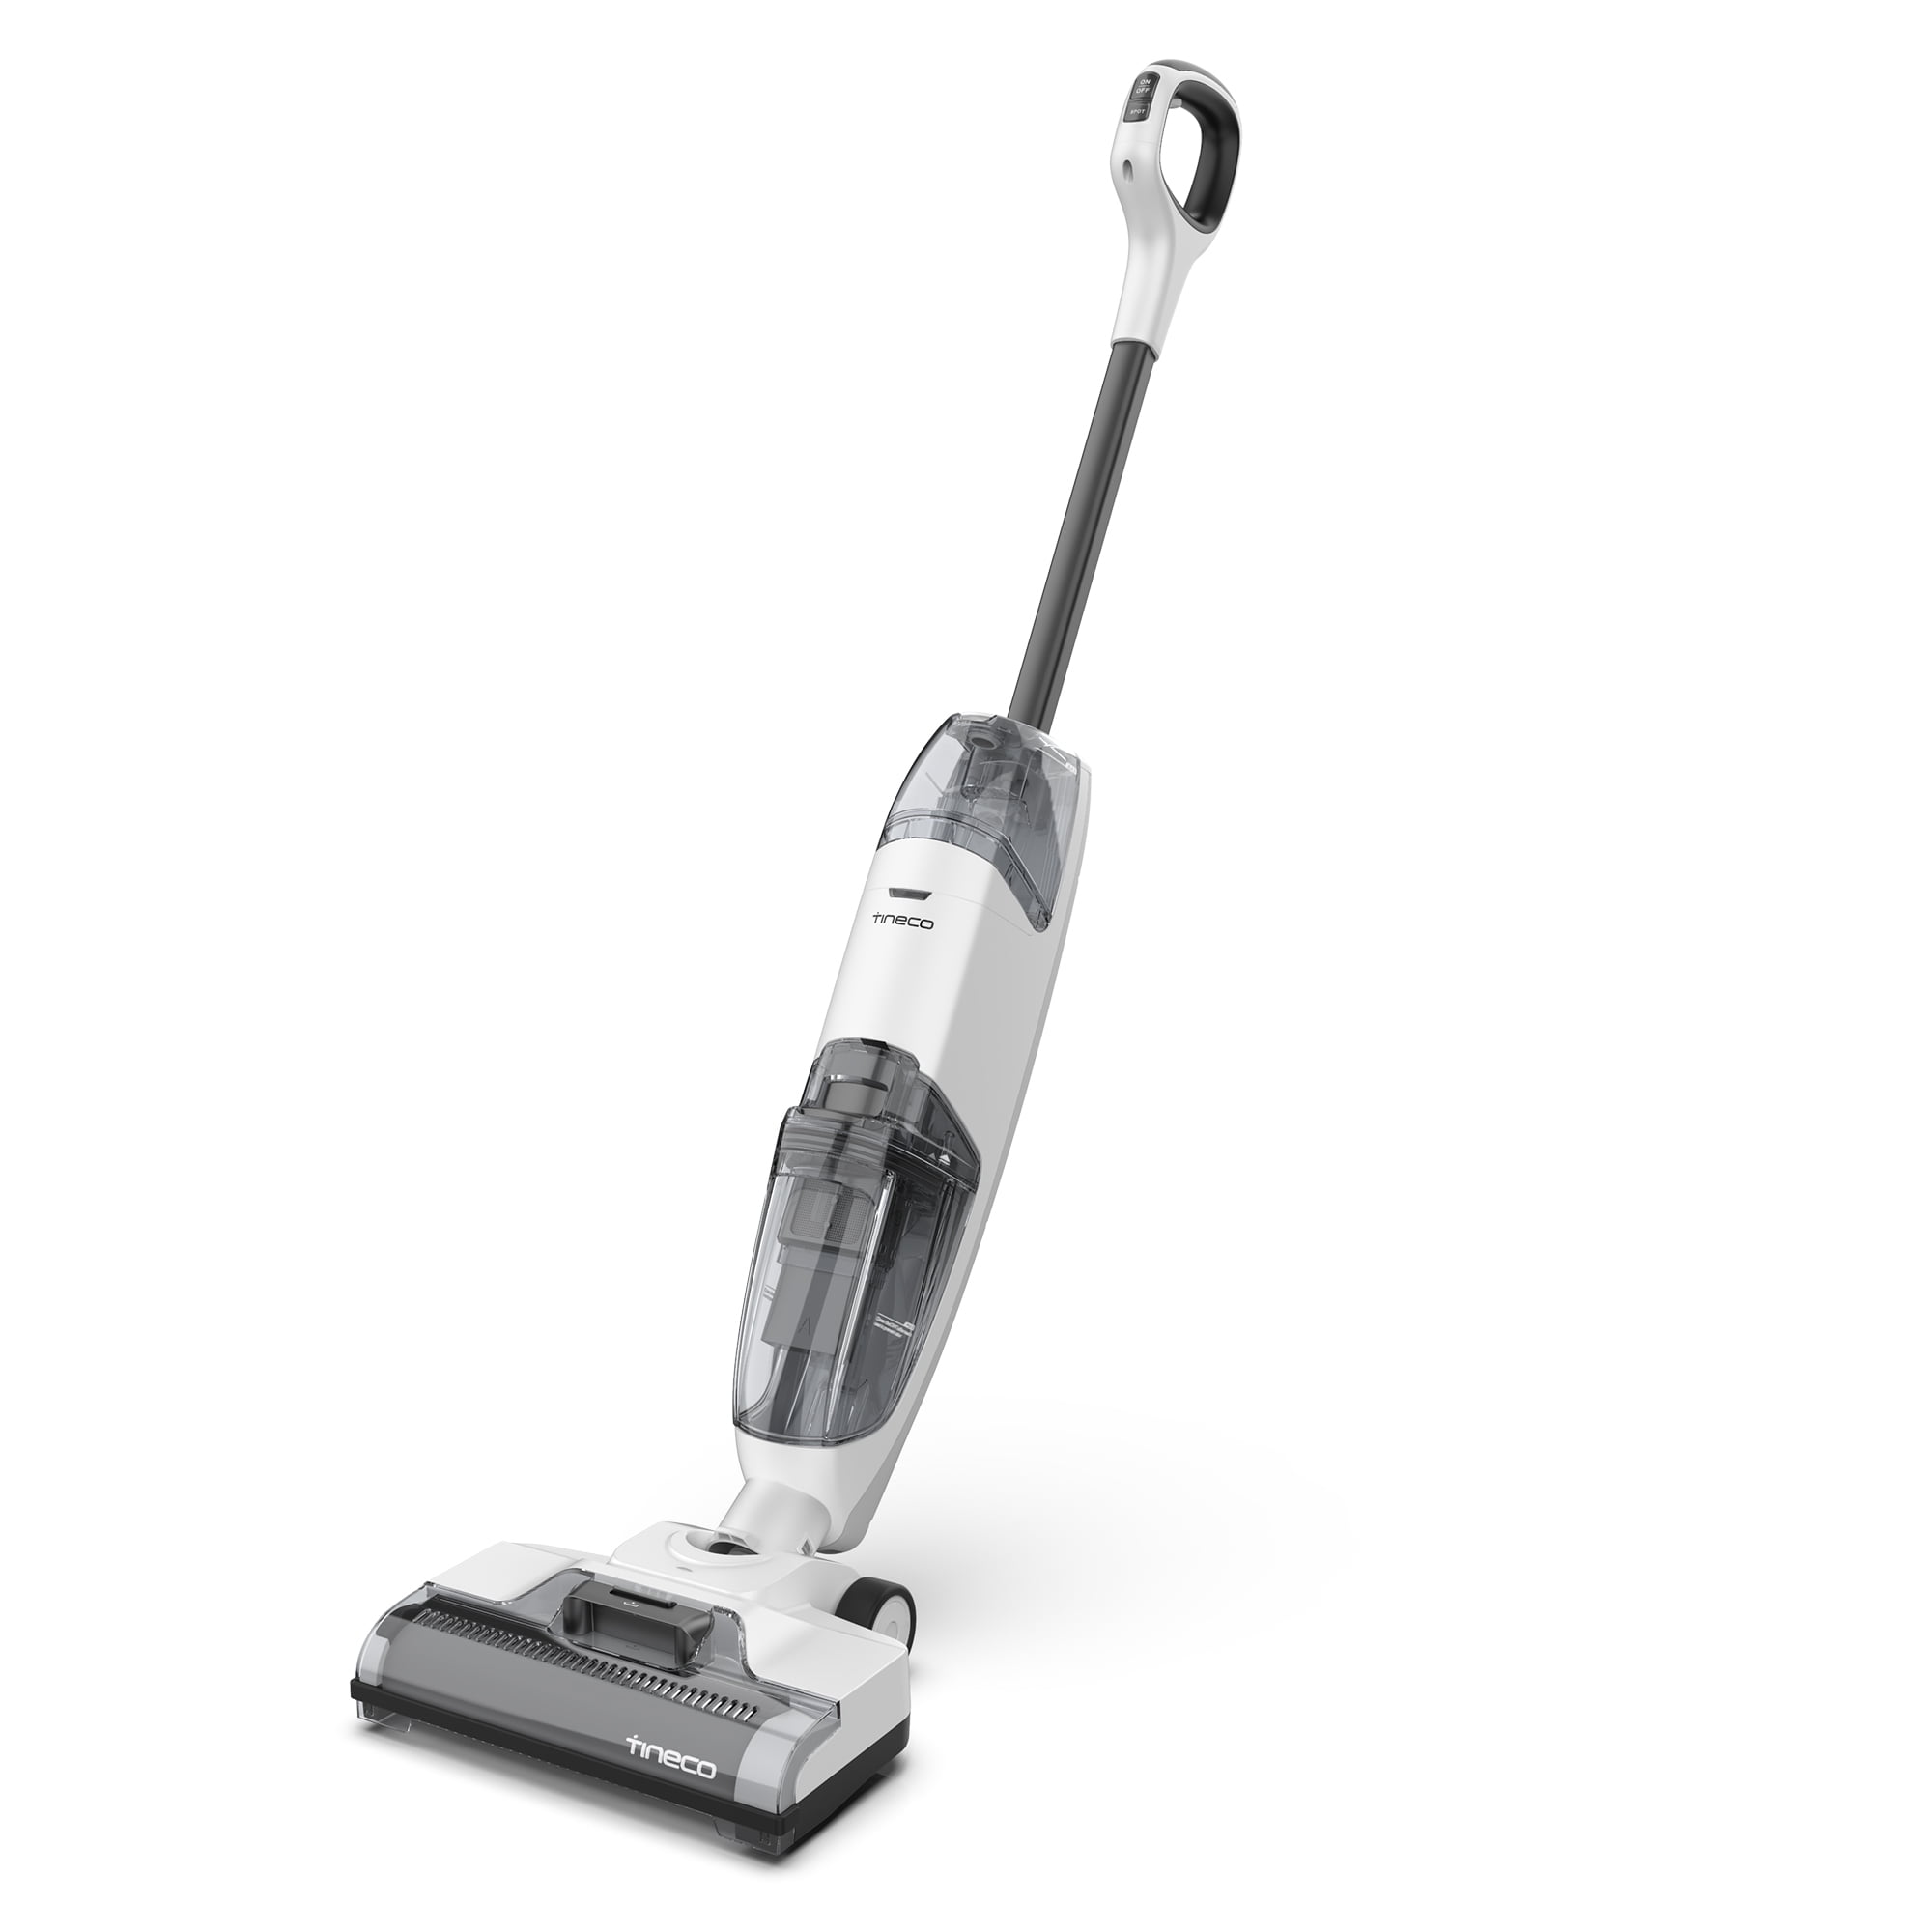 Tineco iFloor 3 Silver Handheld Wet Dry Vacuum Cleaner - Pasadena